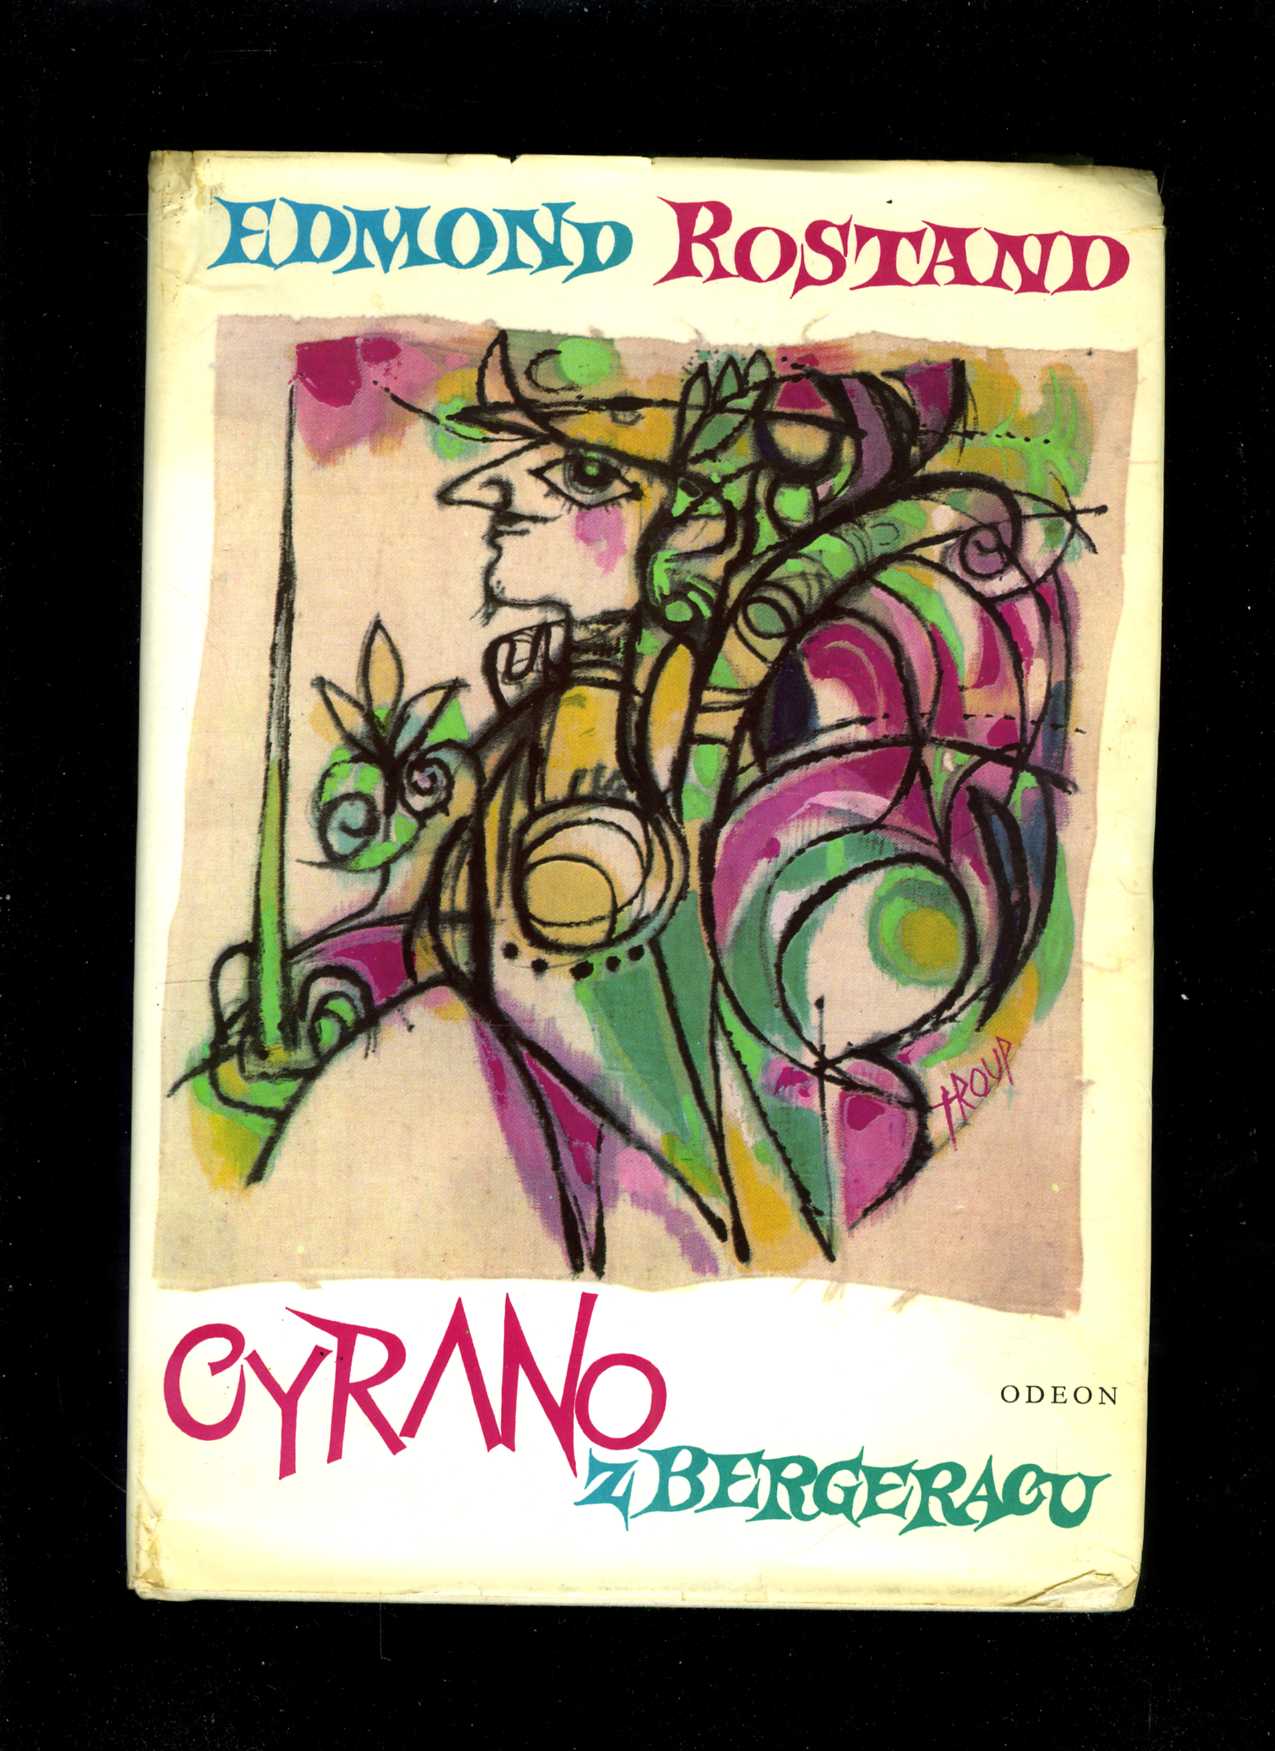 Cyrano z Bergeracu (Edmond Rostand)